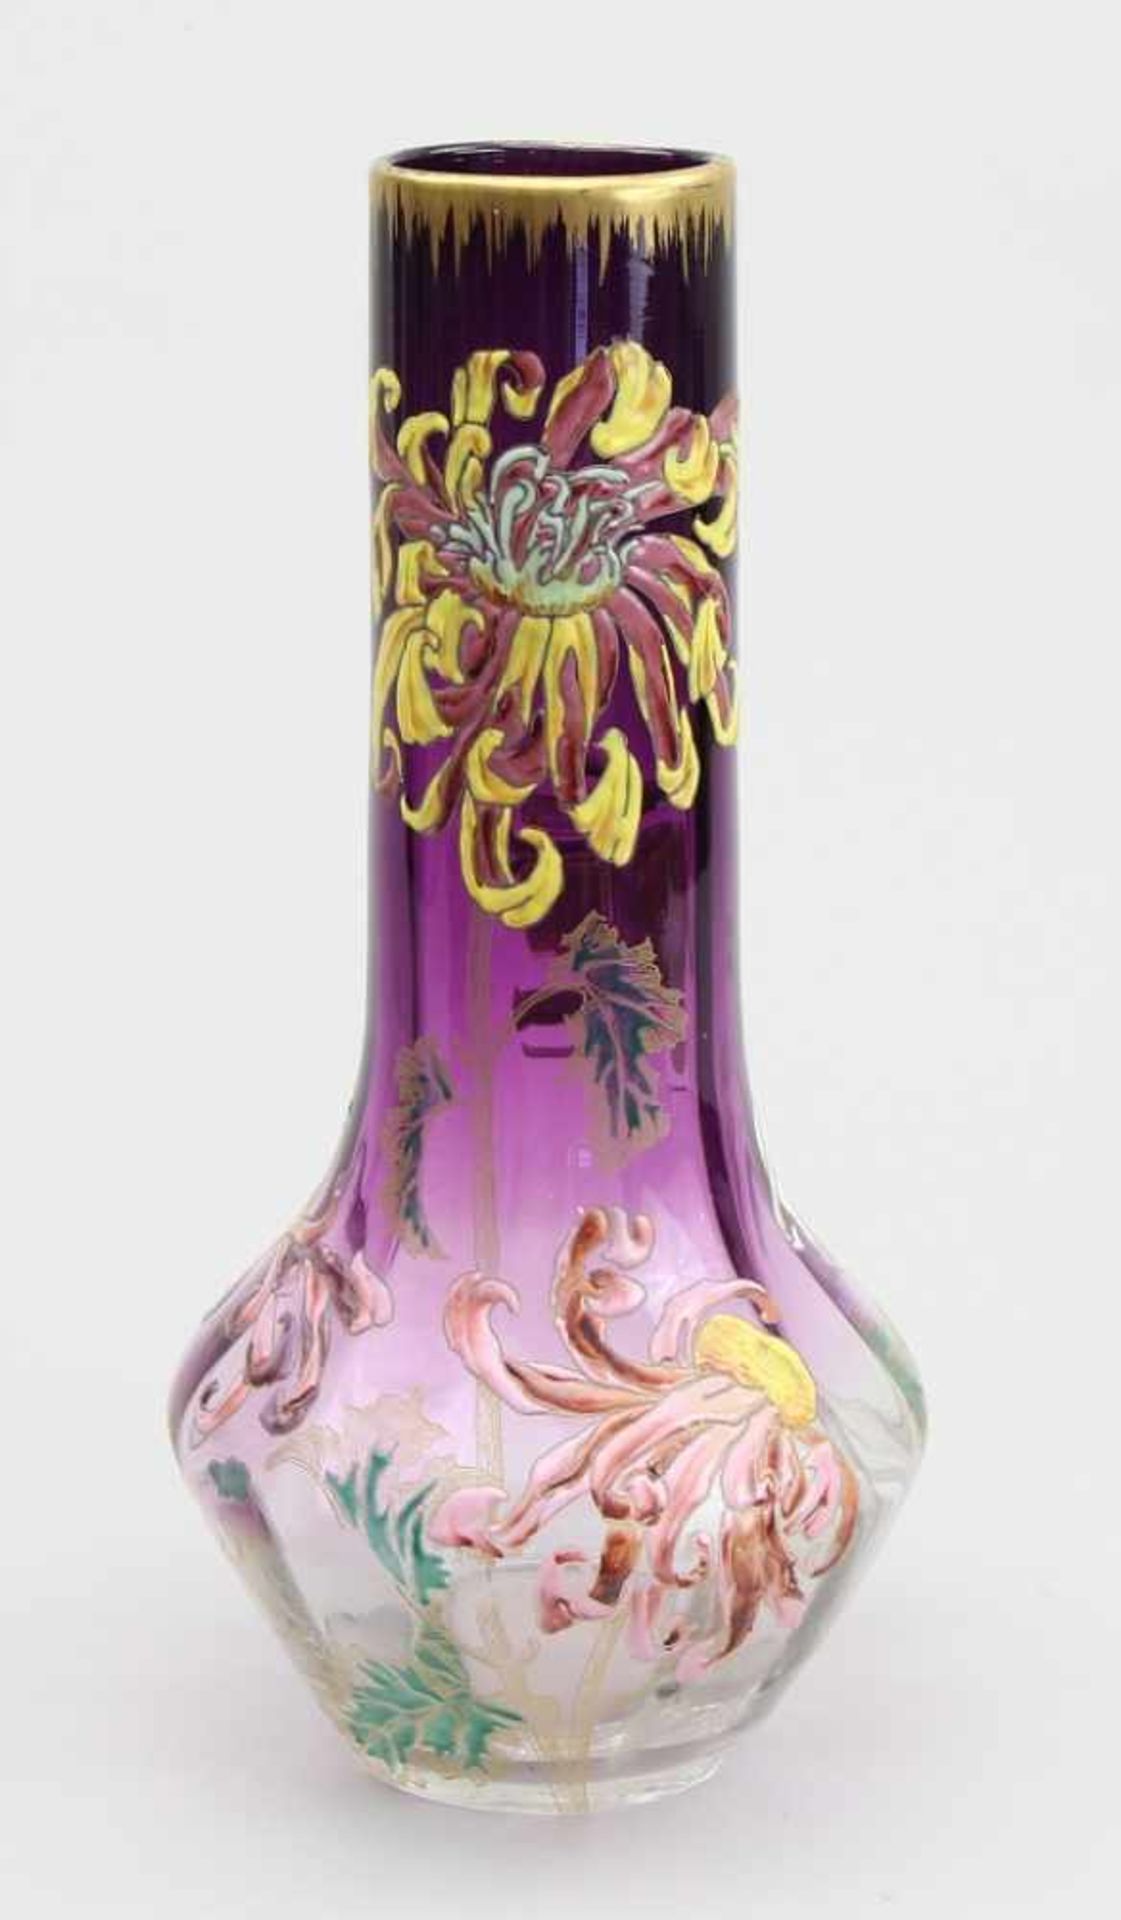 Legras - Vase Farbloses und amethystfarbenes Glas modelgeblasen, pastose farbige Emailbemalung mit